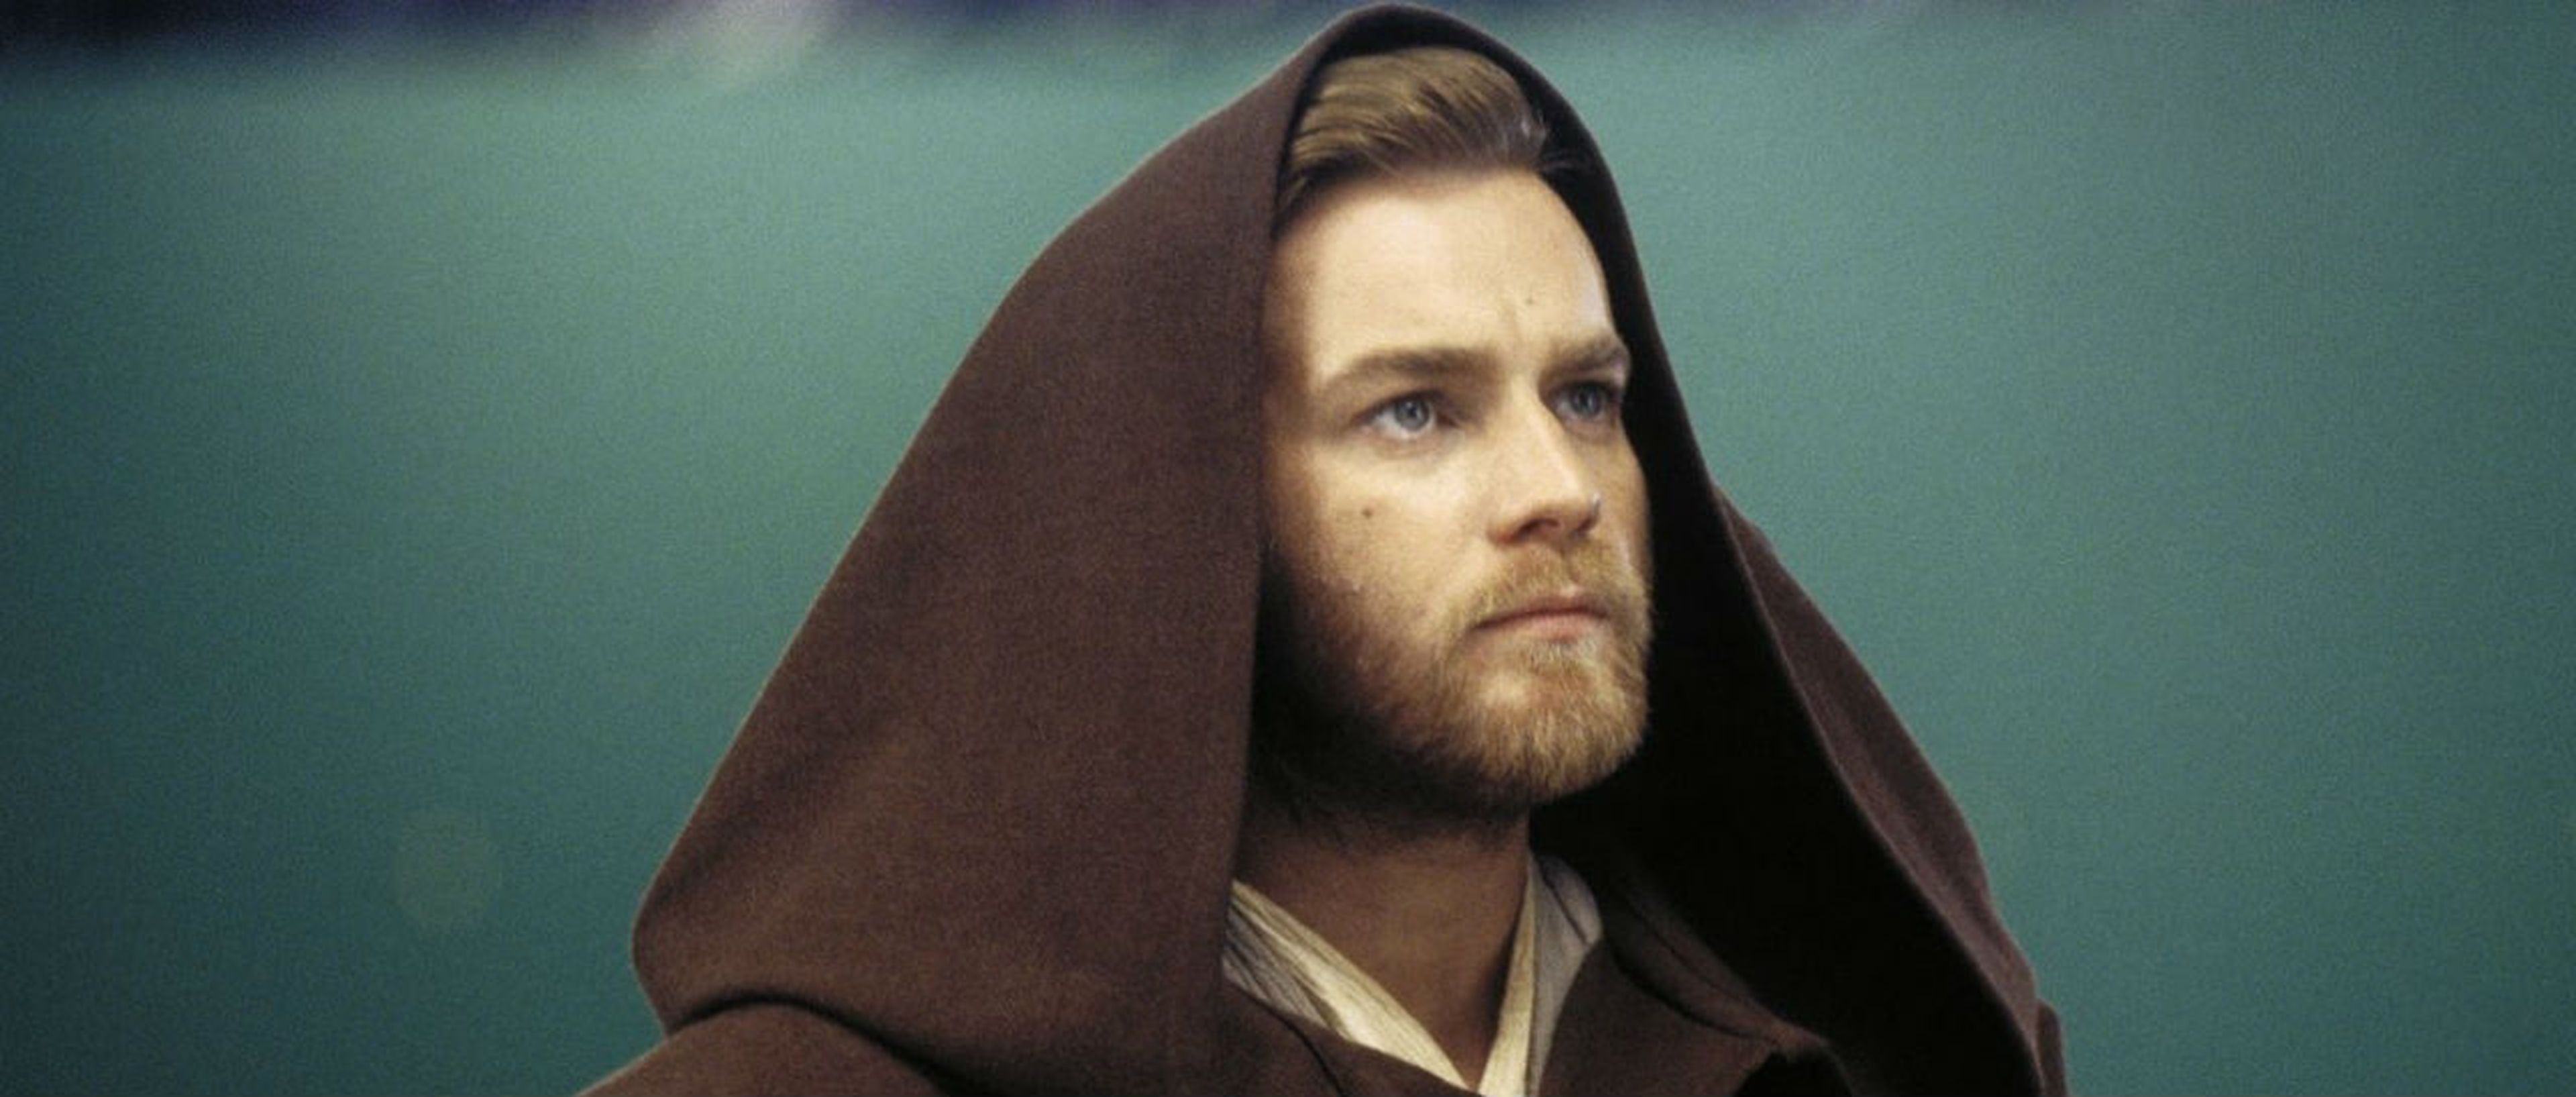 Obi-Wan Kenobi - Ewan McGregor